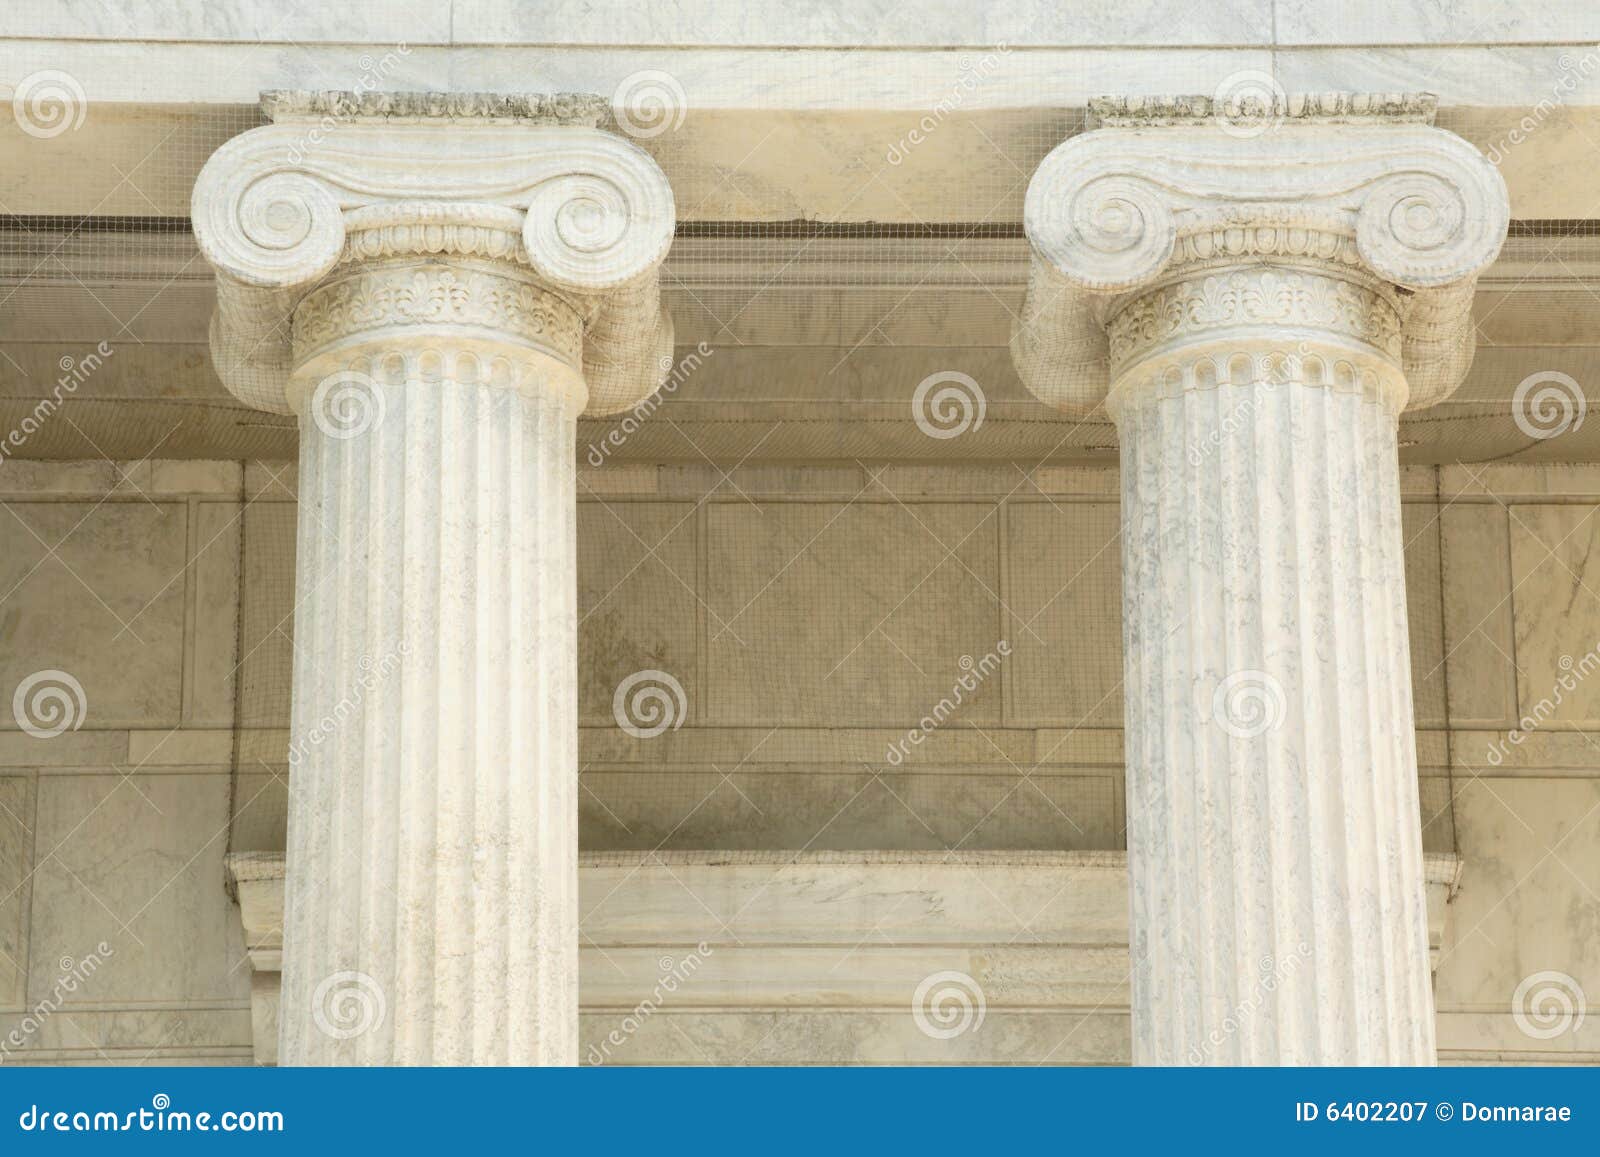 iconic marble pillars